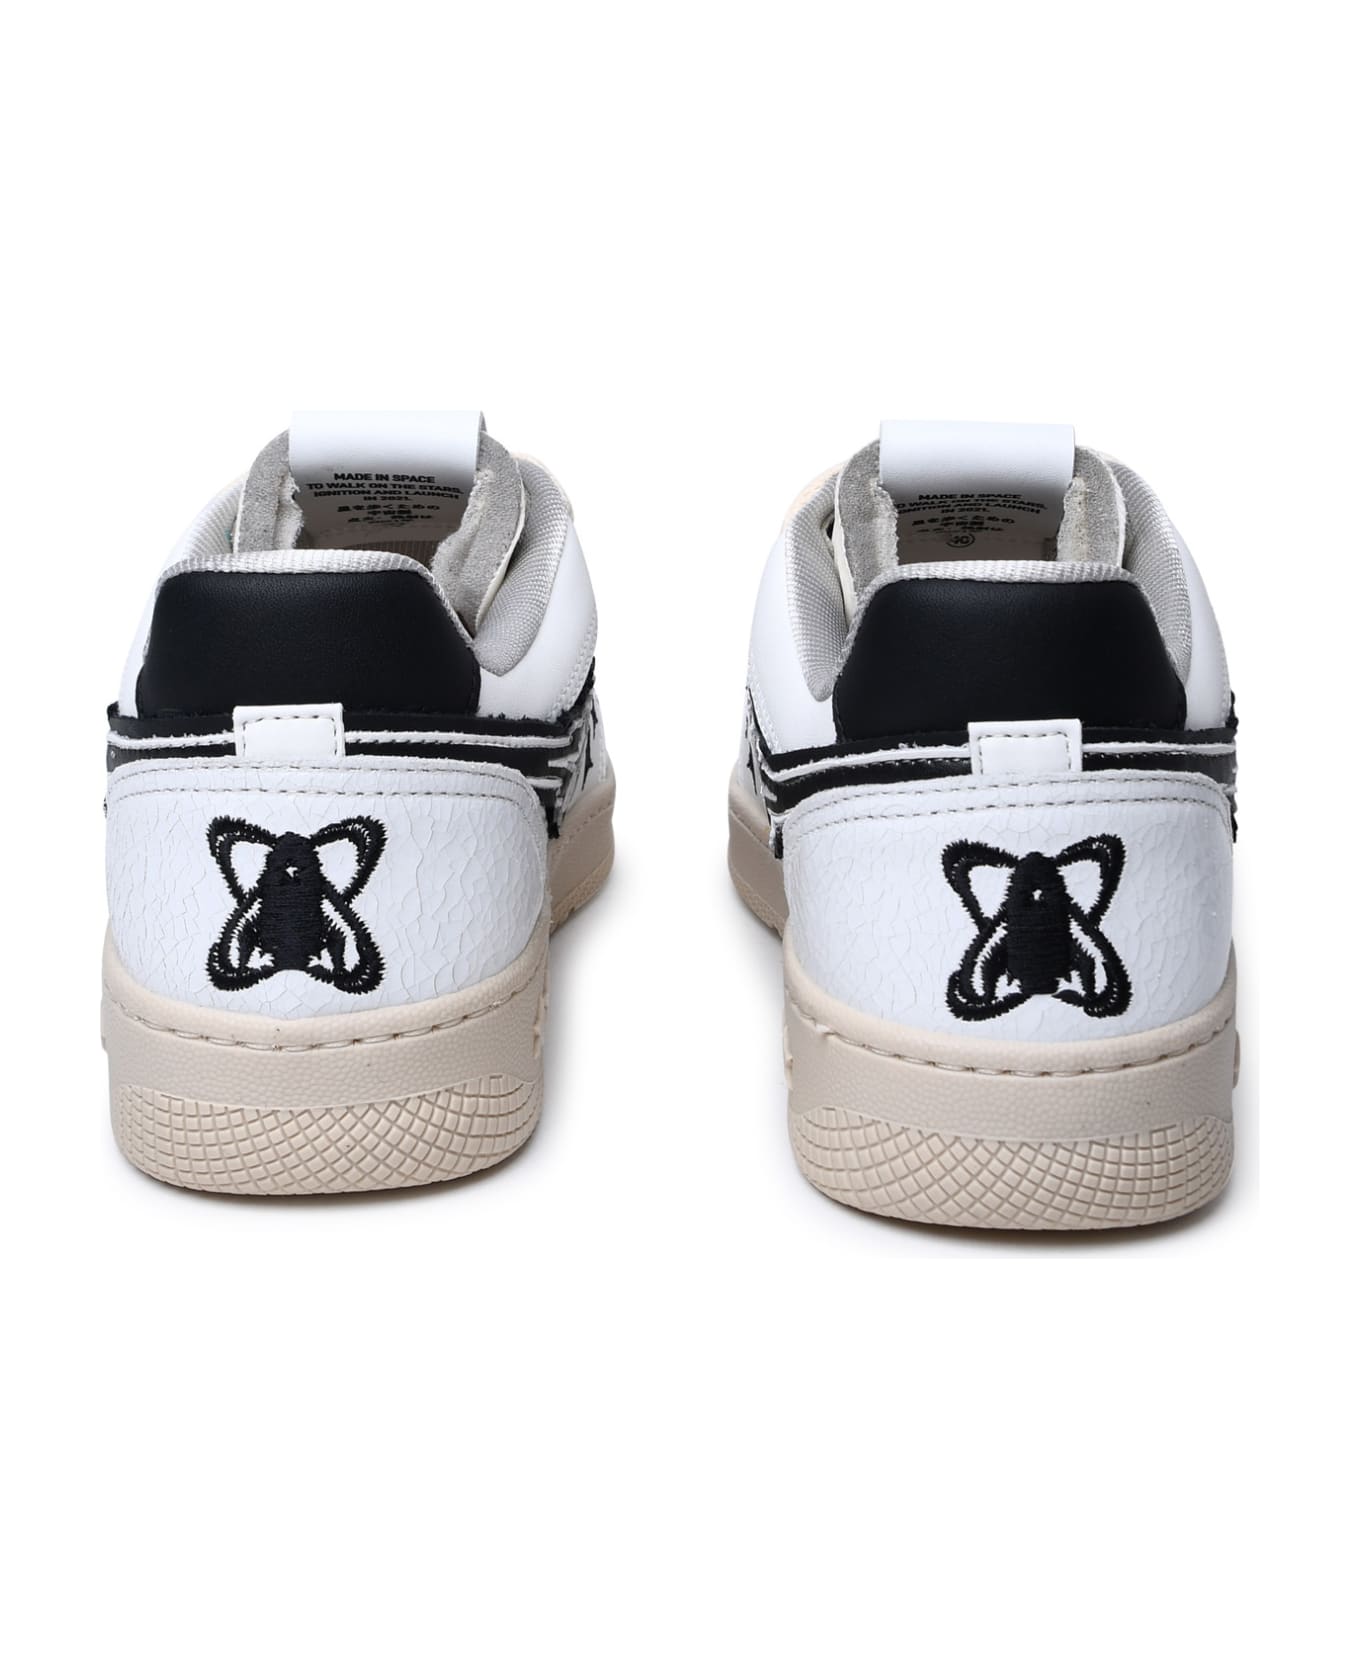 Enterprise Japan White Leather Sneakers - White